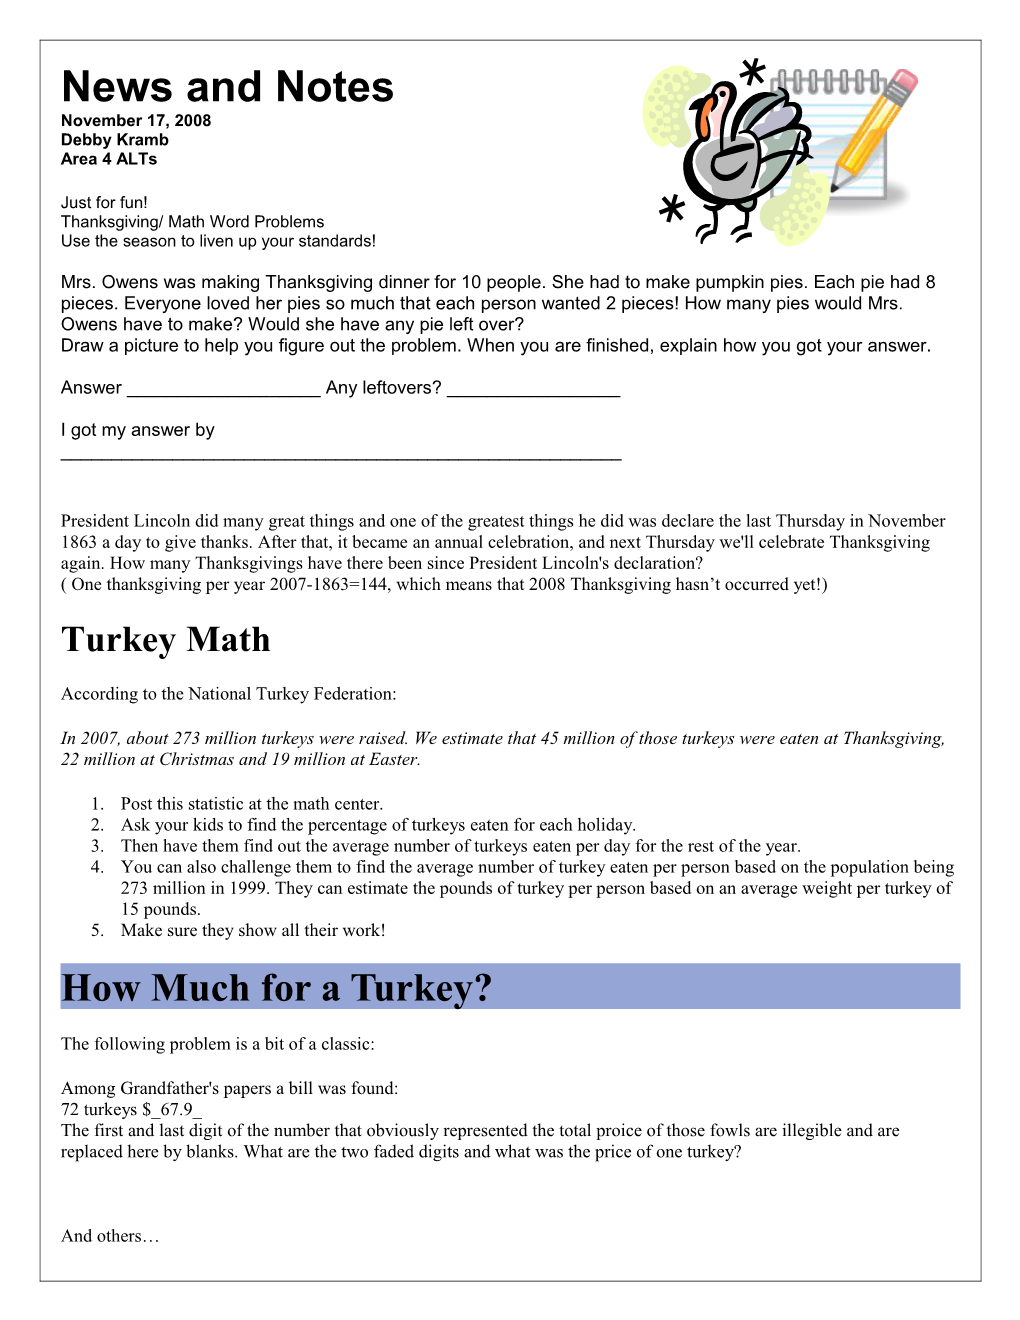 Thanksgiving/ Math Word Problems